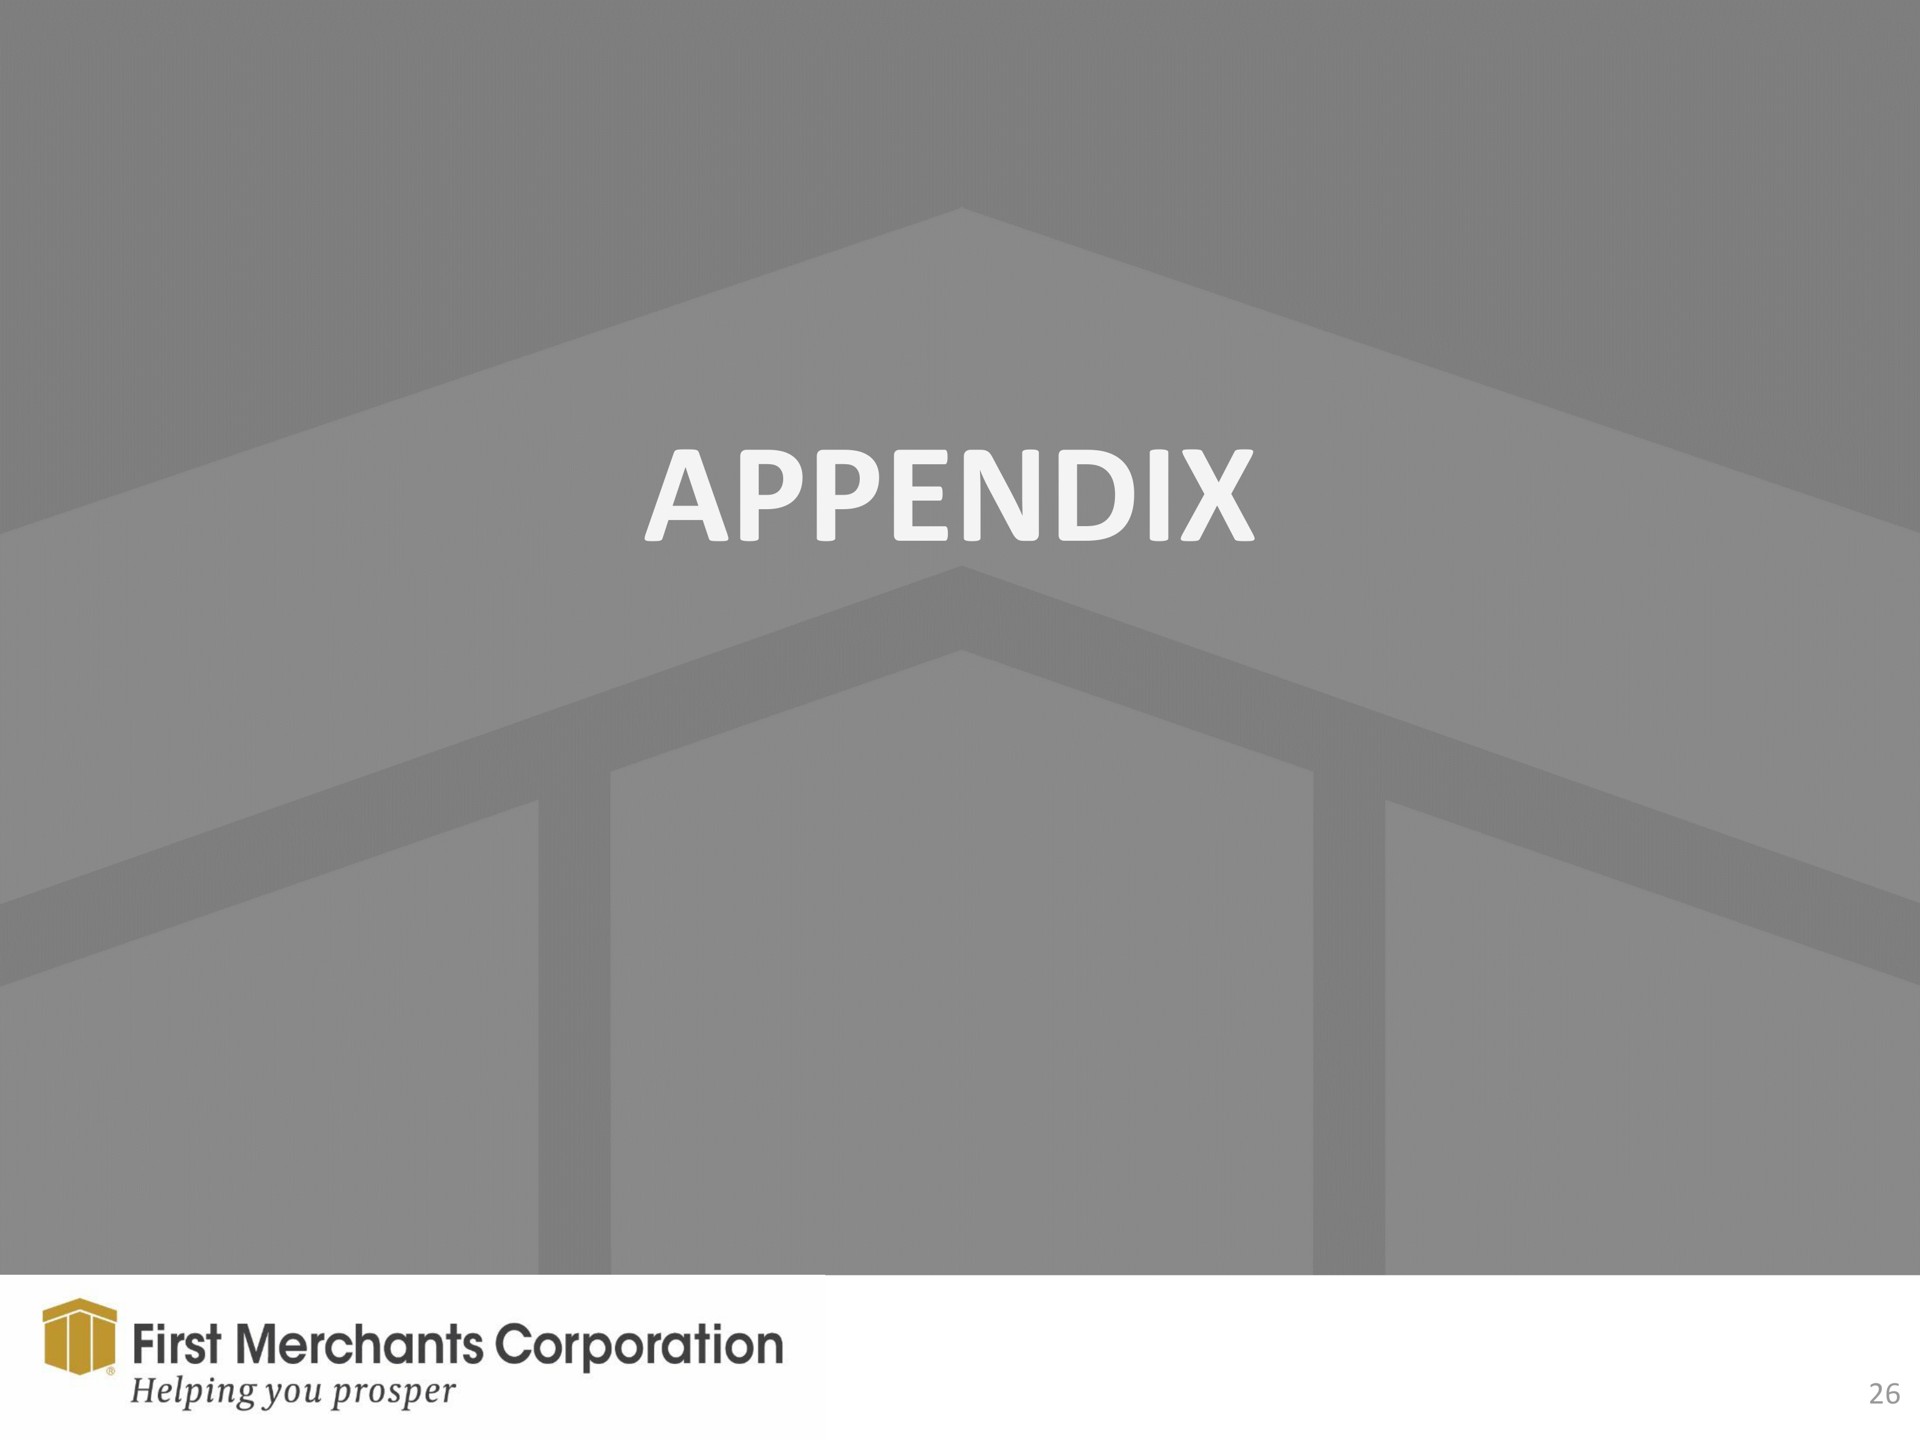 appendix see i first merchants corporation helping you prosper | First Merchants